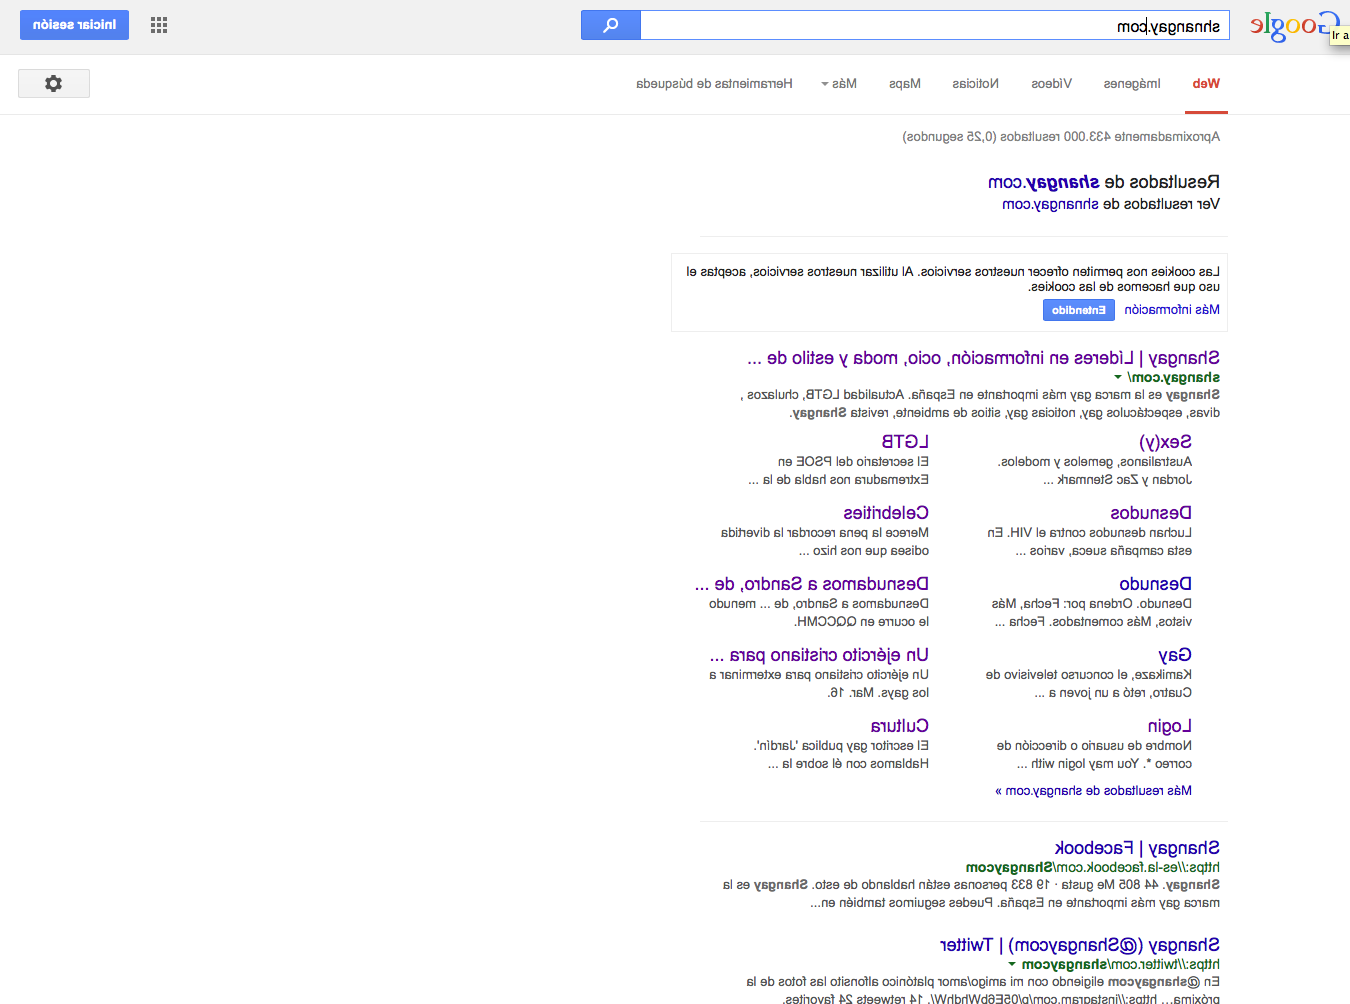 Google se siente 'invertido'